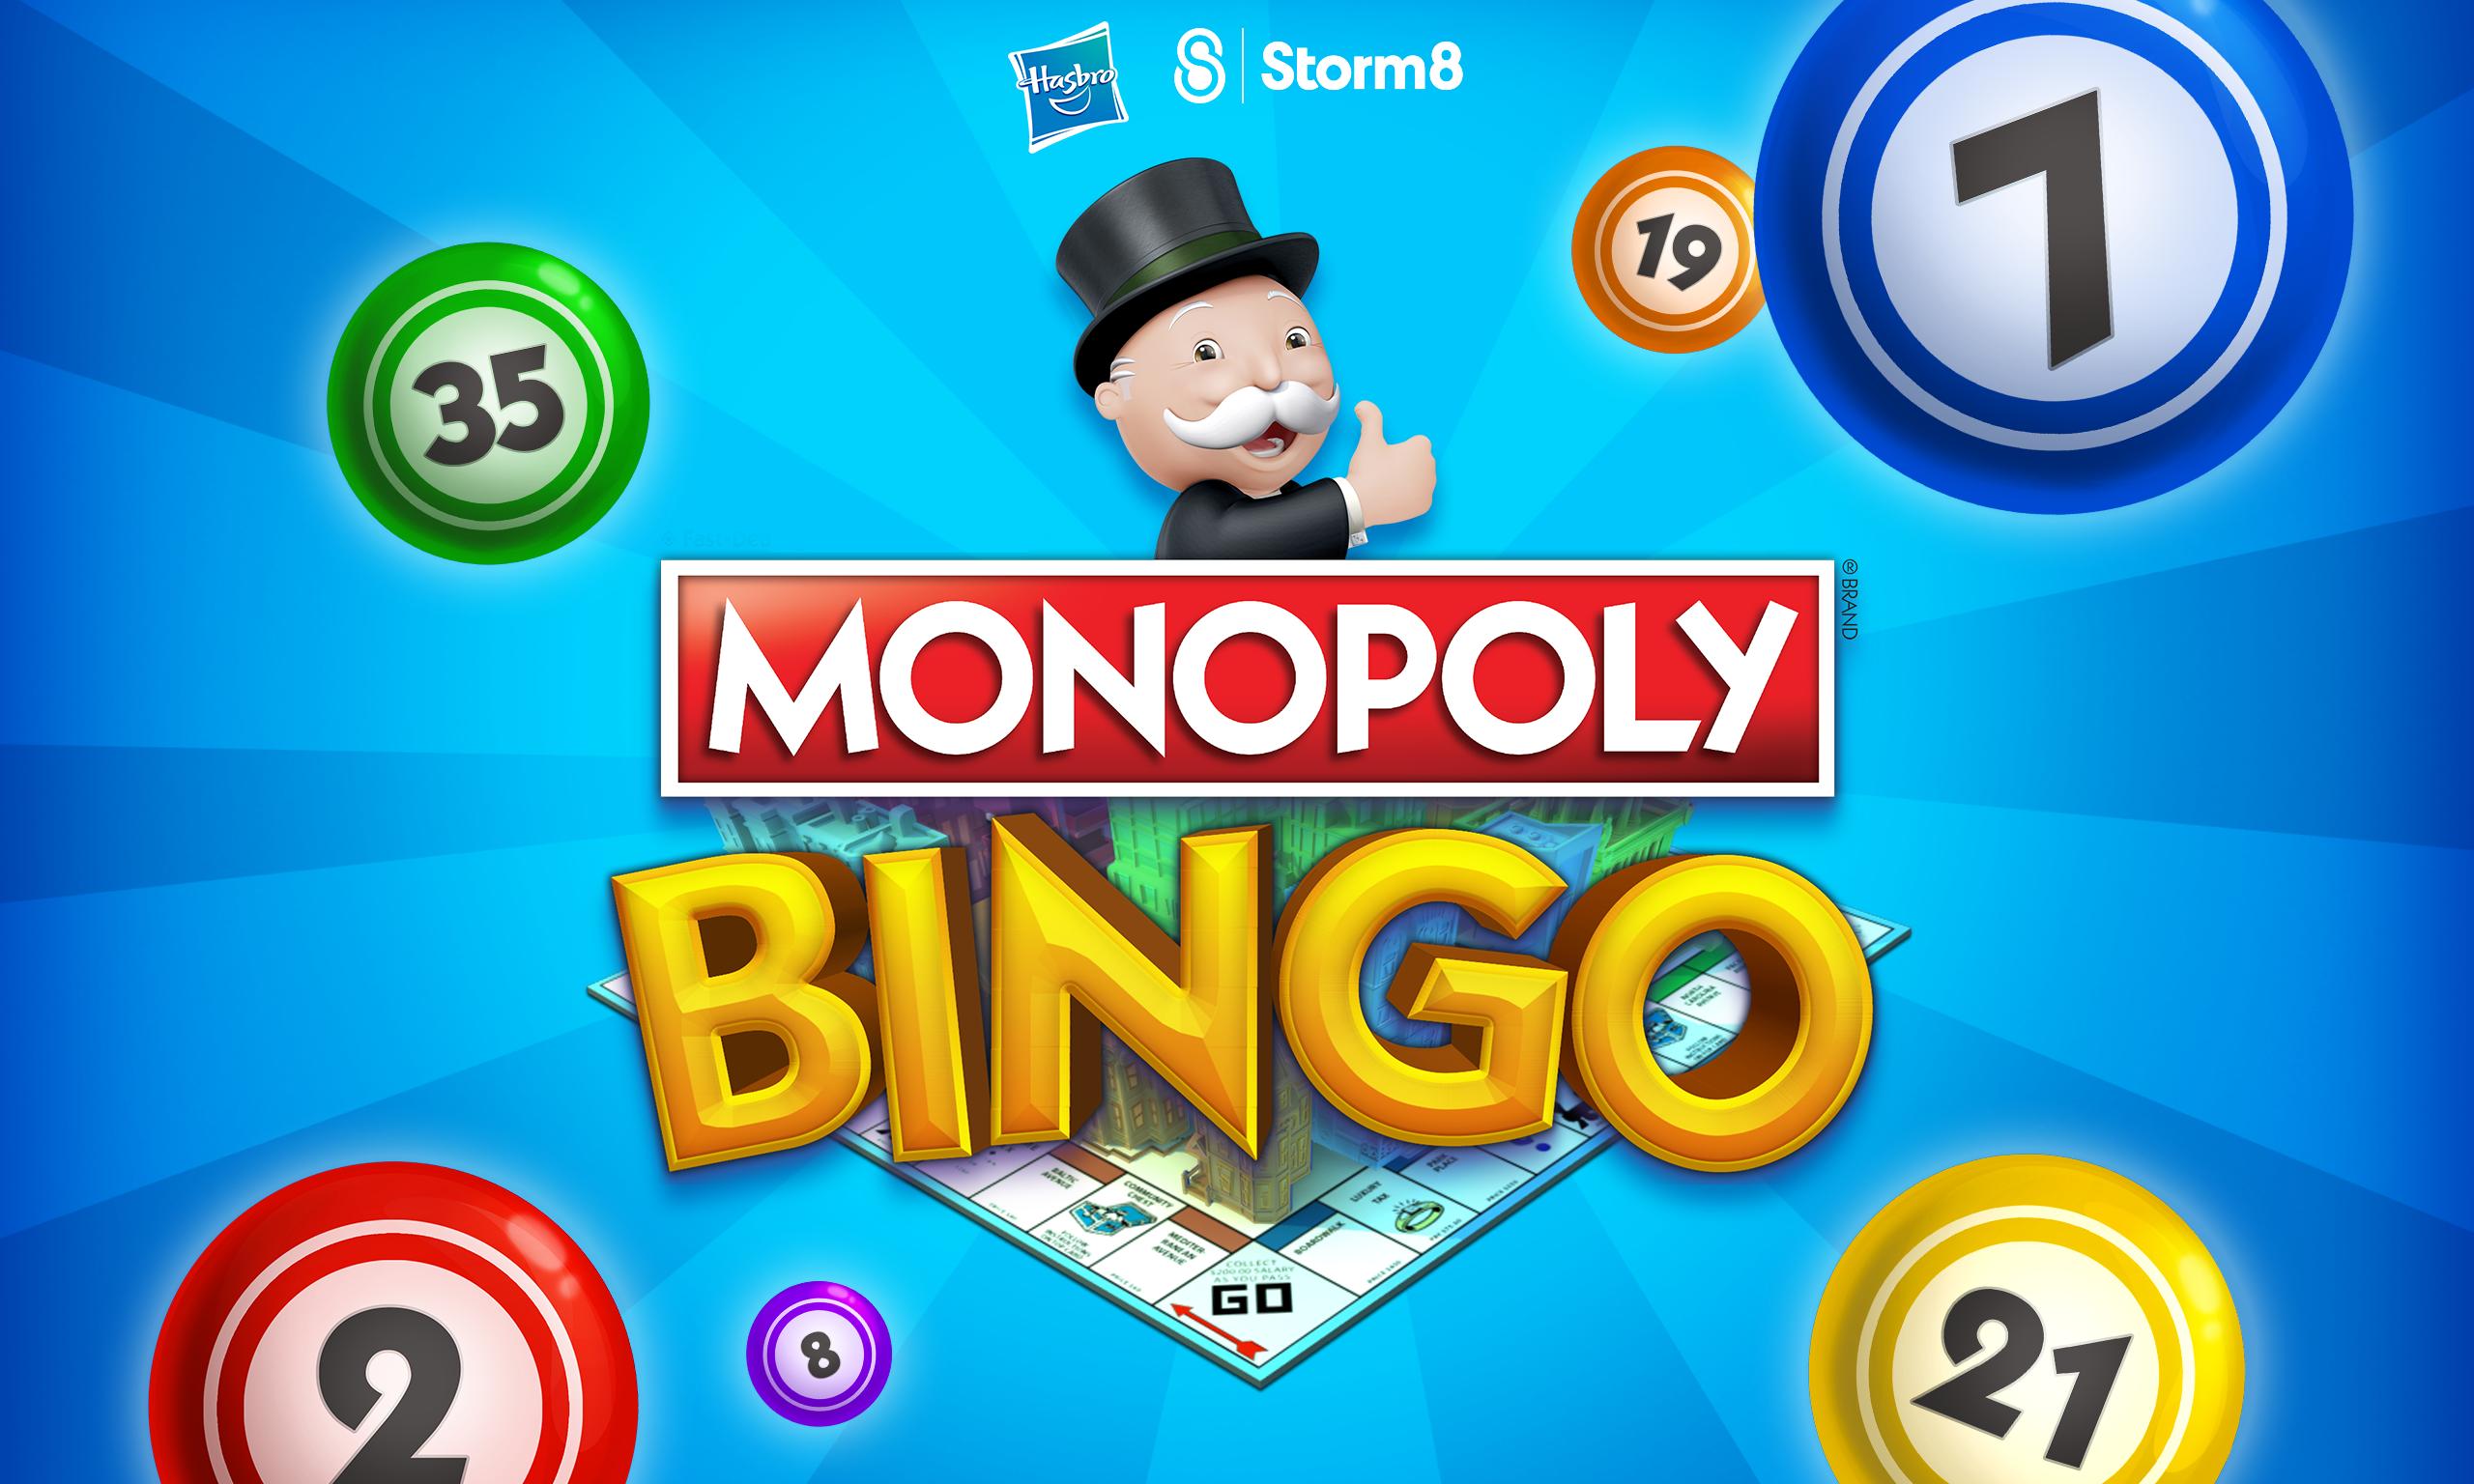 MONOPOLY Bingo! 3.3.7g Screenshot 18